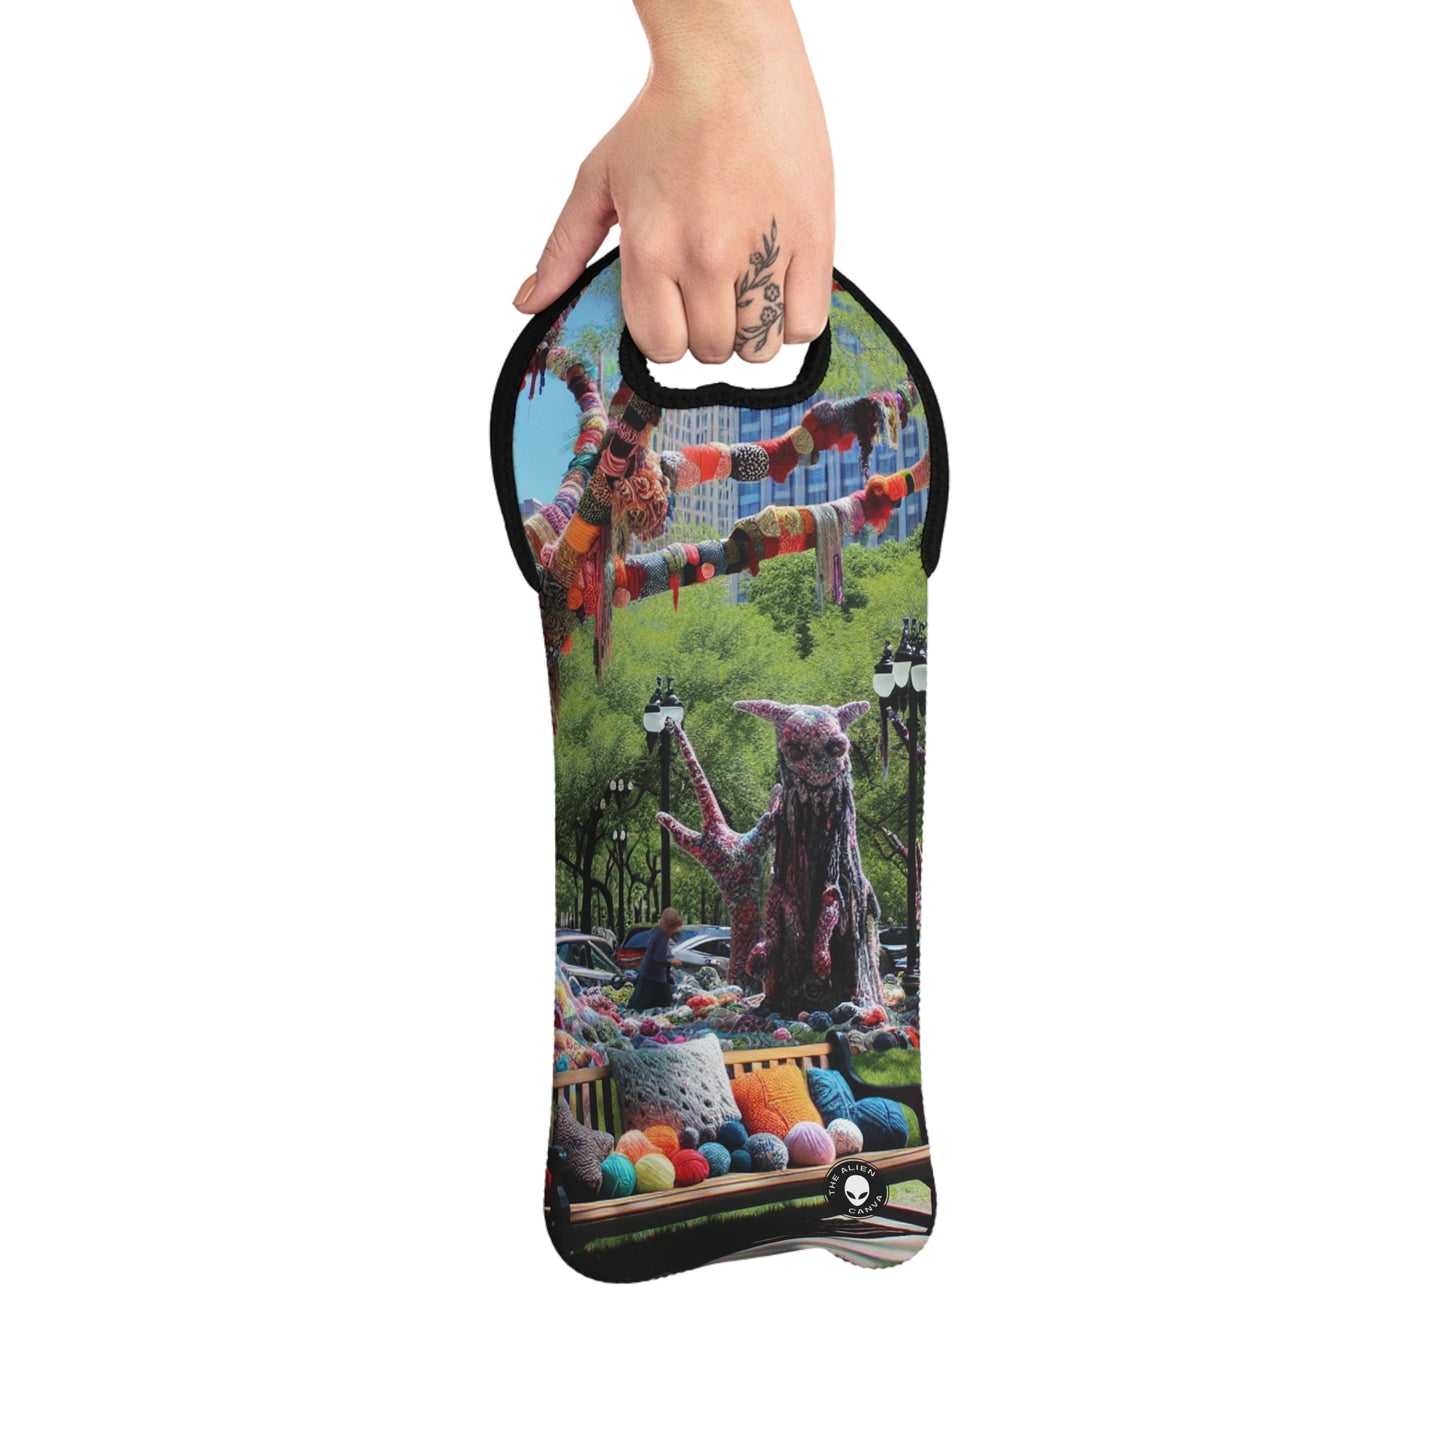 Titre : « Yarnscaped City : A Whimsical Fiber Art Fusion » - The Alien Wine Tote Bag Yarn Bombing (Fiber Art)